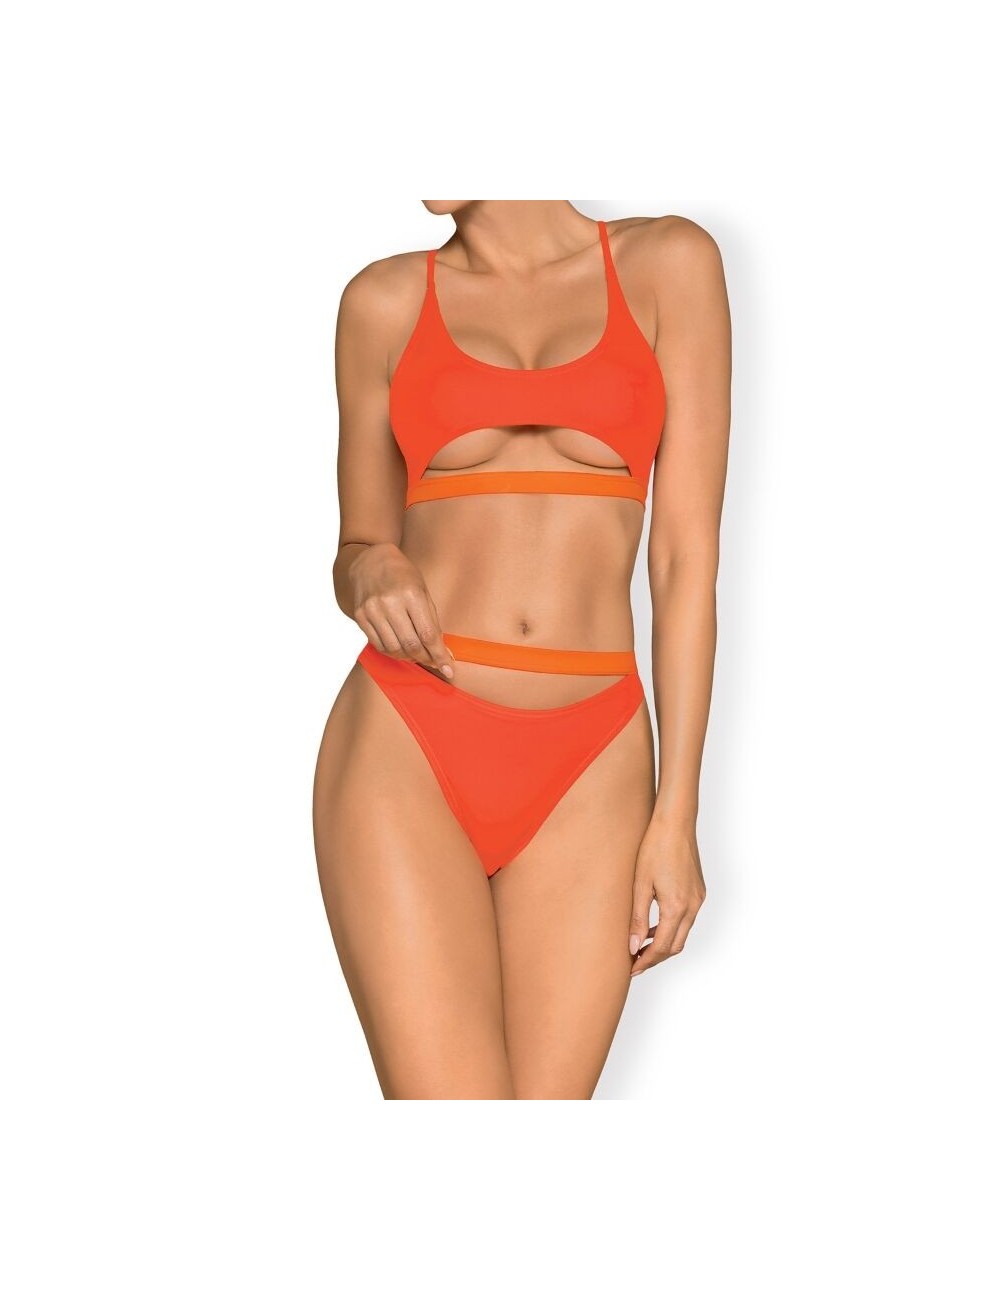 Lingerie - Maillots de bain et tenues de plage - Obsessive - miamelle bikini rojo l - Obsessive Summer